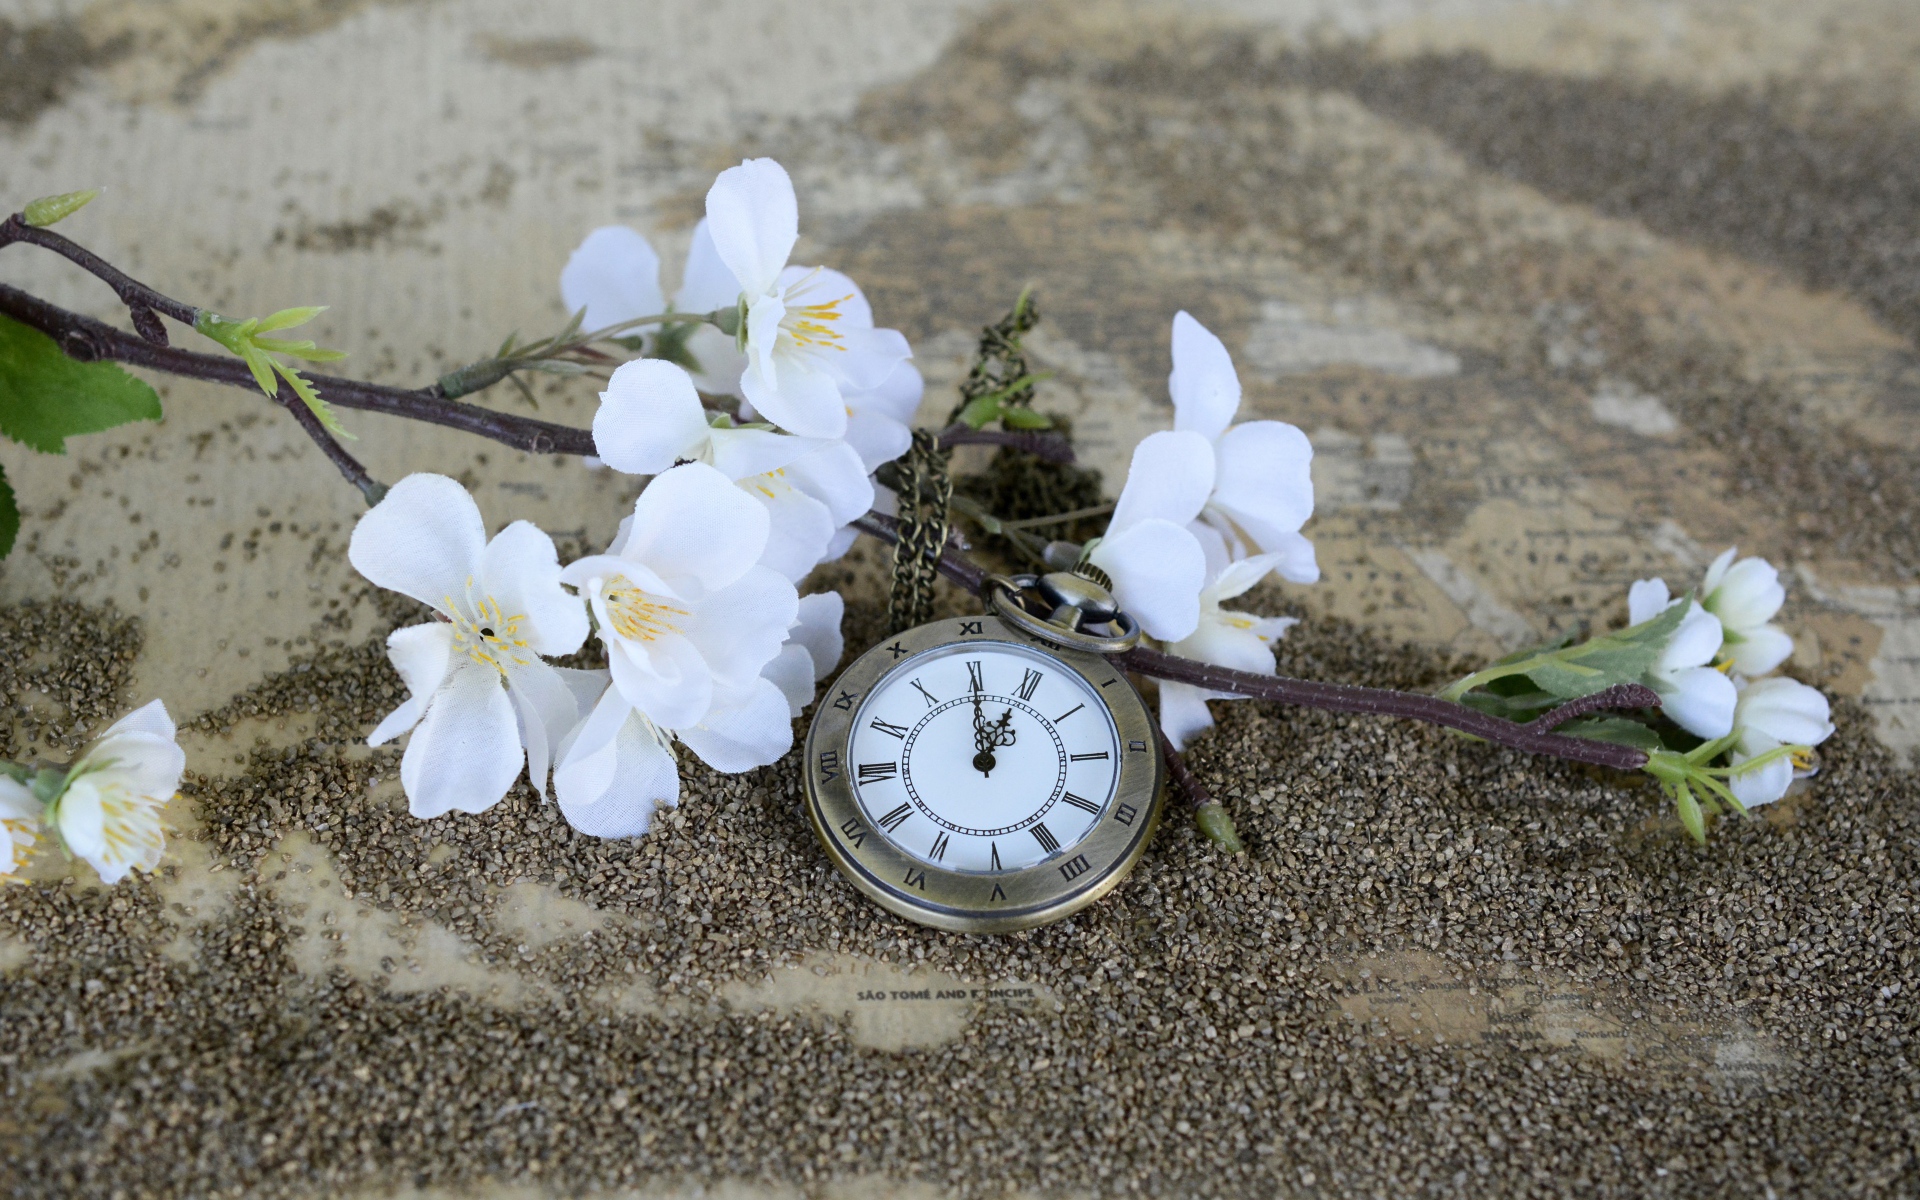 Часы лежат на земле с цветущей веткой 